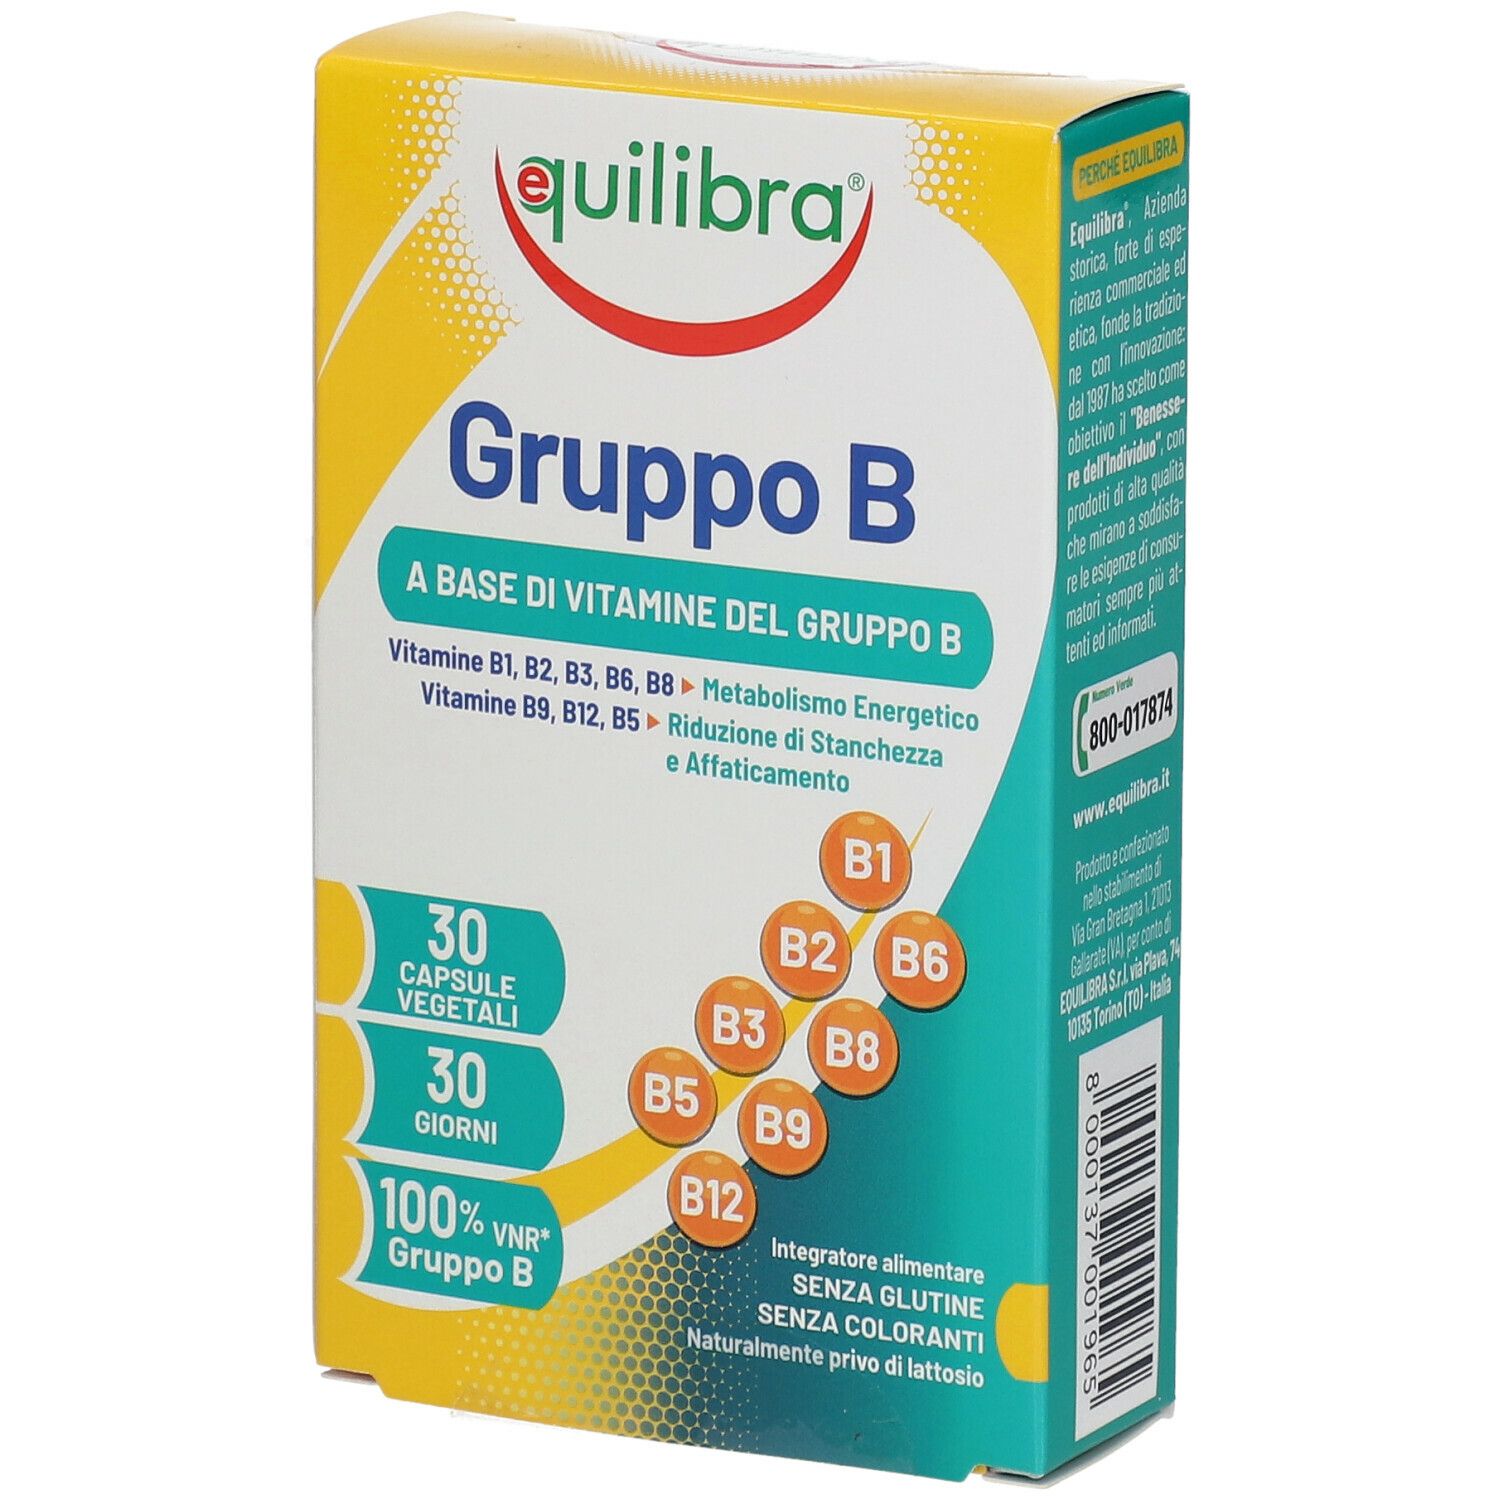 Image of Equilibra® Gruppo B